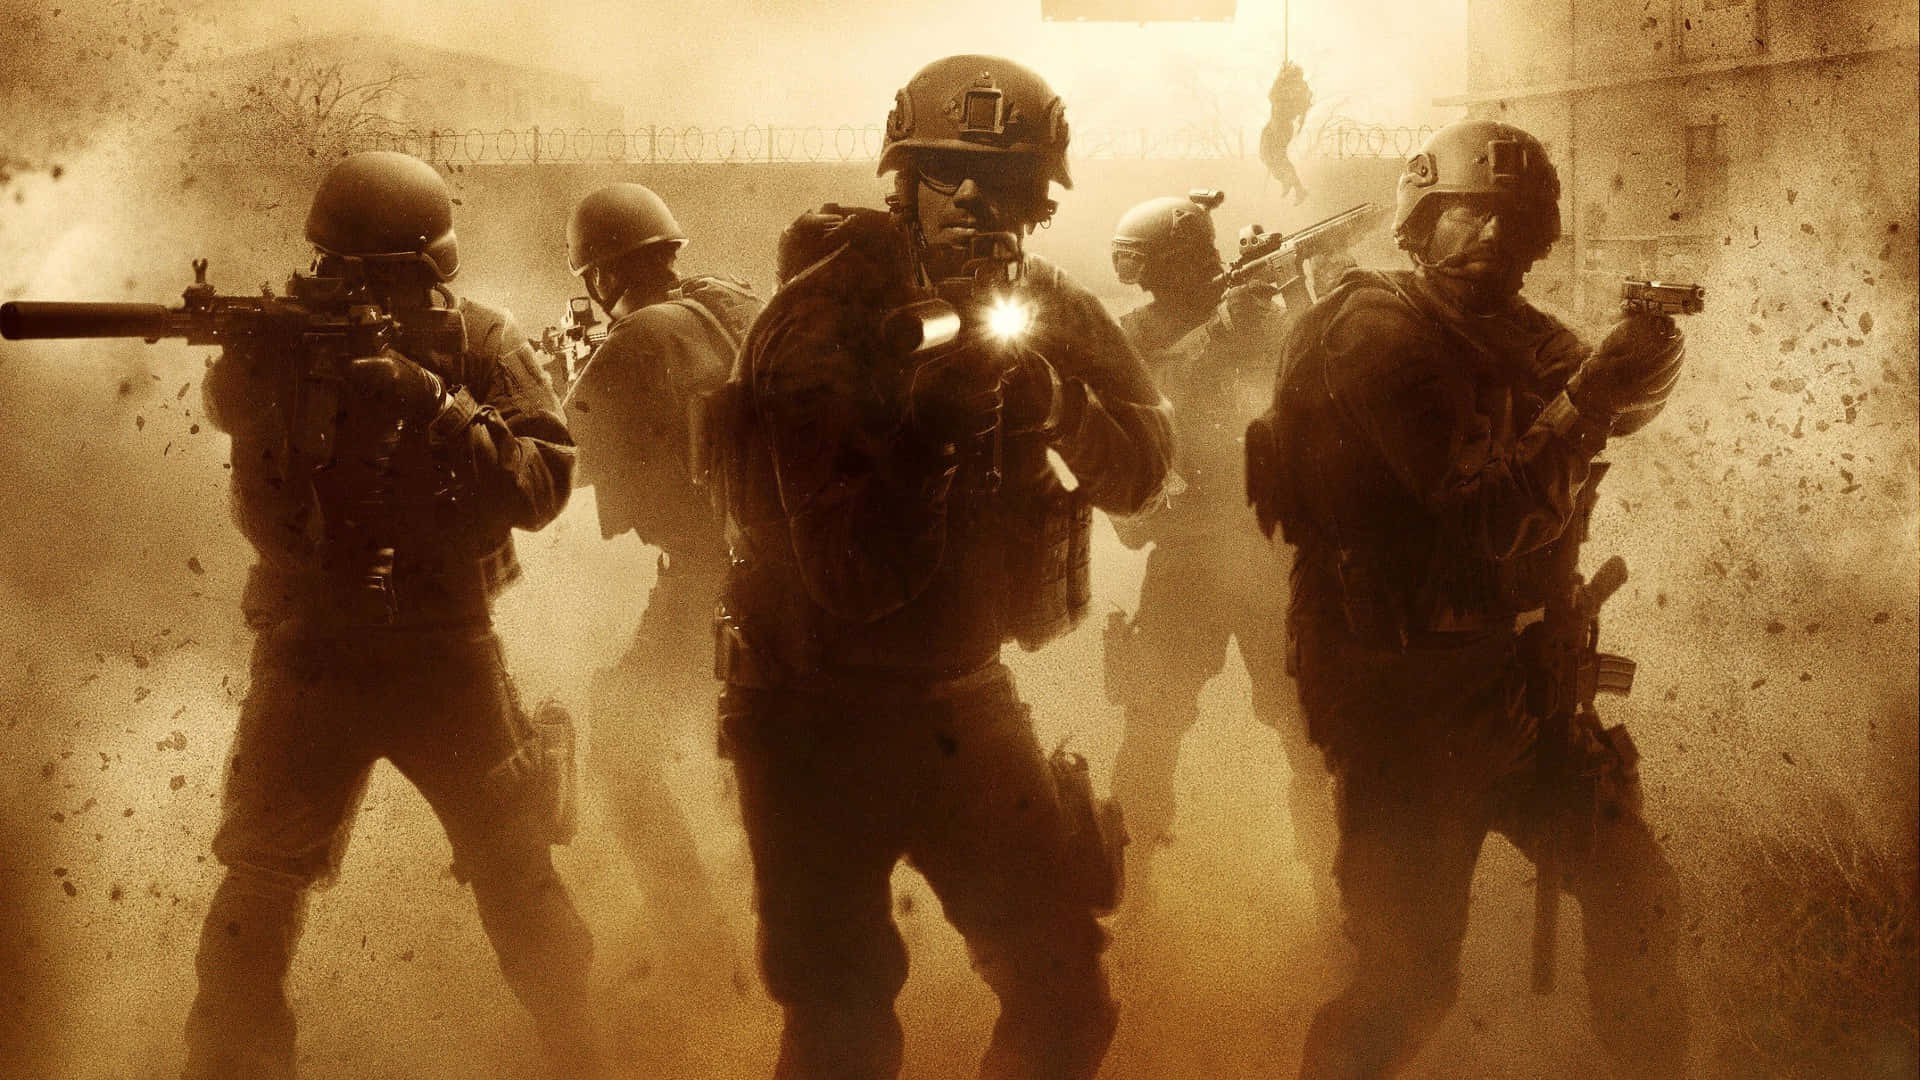 Call Of Duty: Modern Warfare - Enter a Digital War Zone Wallpaper